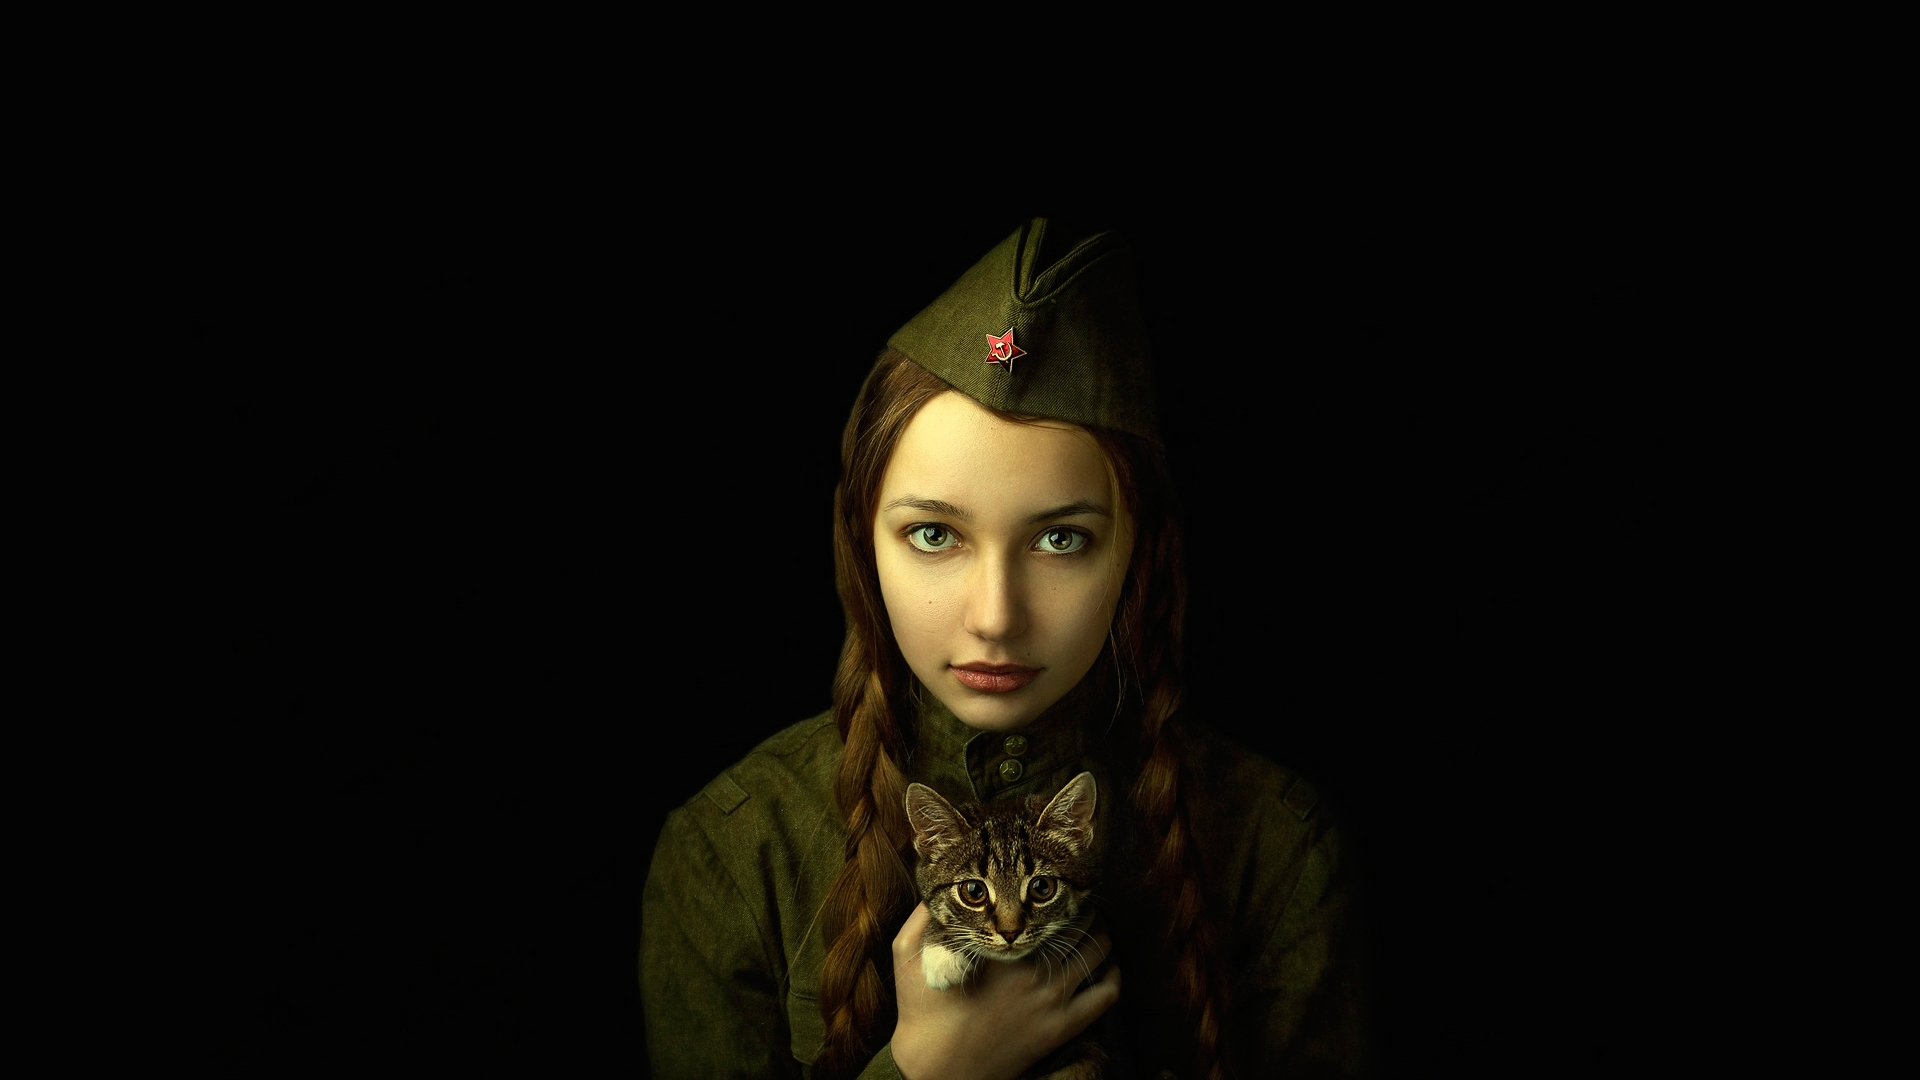 Soldier Girl Portrait for 1920 x 1080 HDTV 1080p resolution